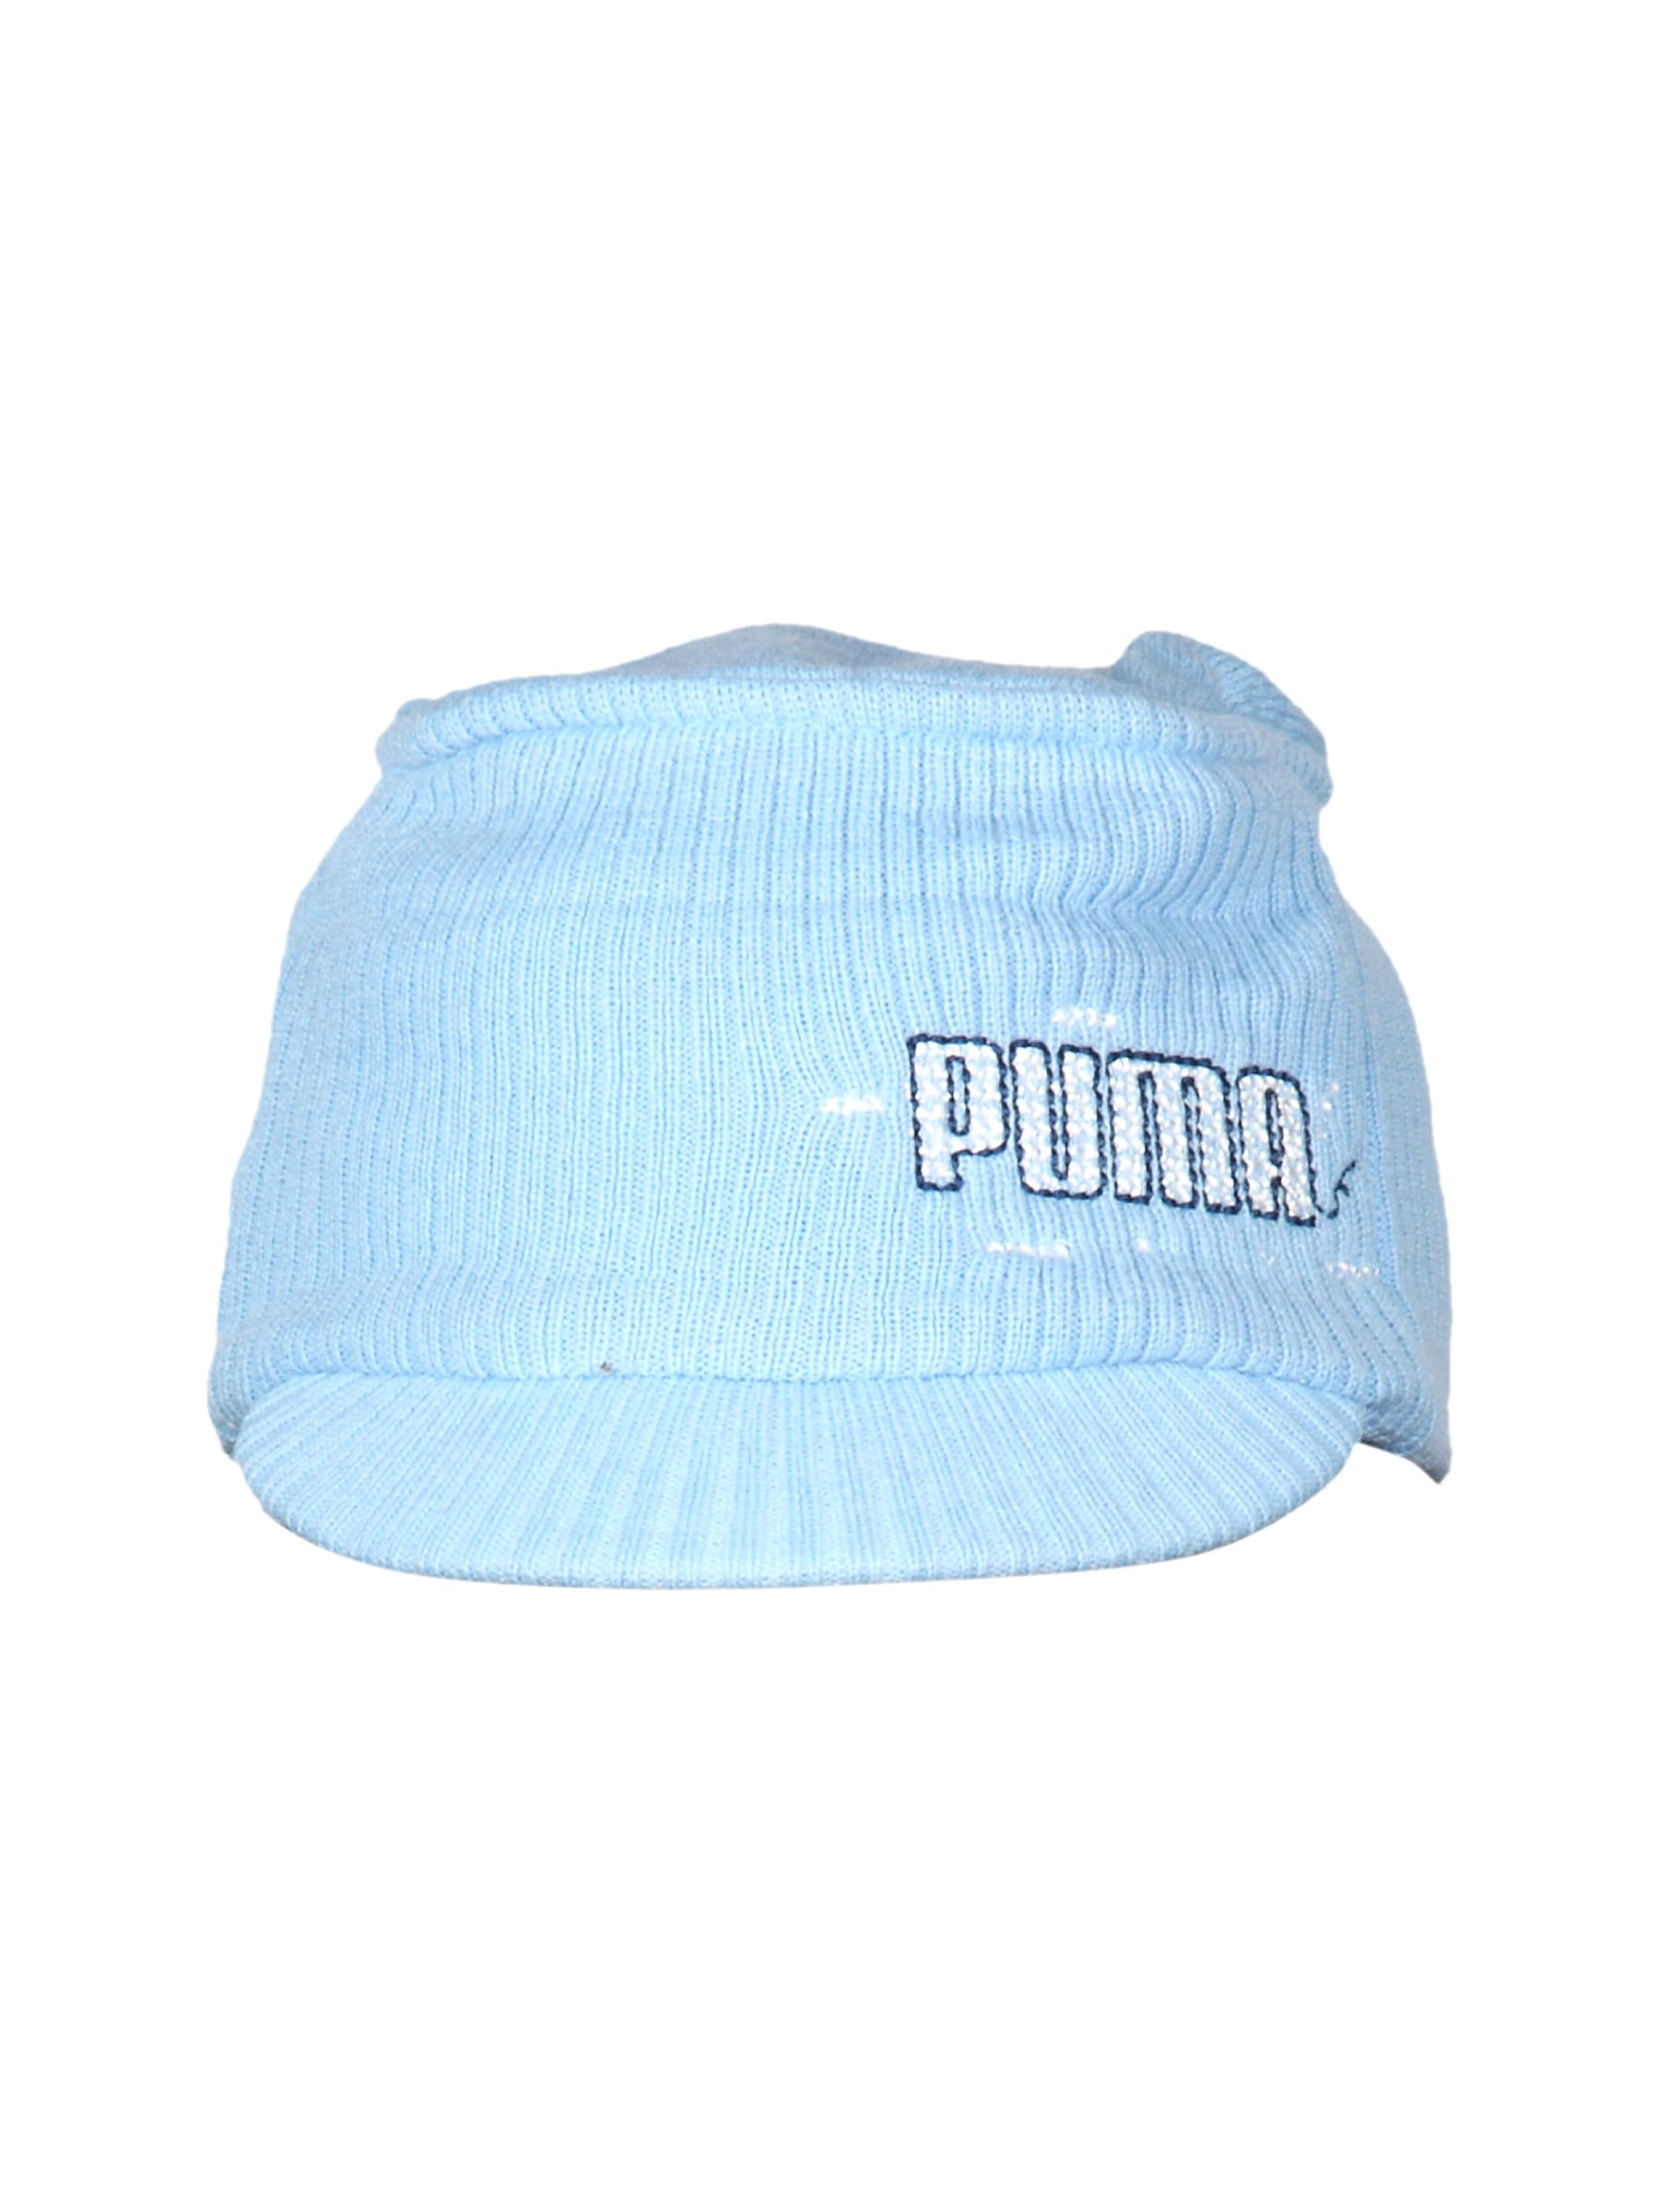 Puma Women Minicats Knit Blue Cap